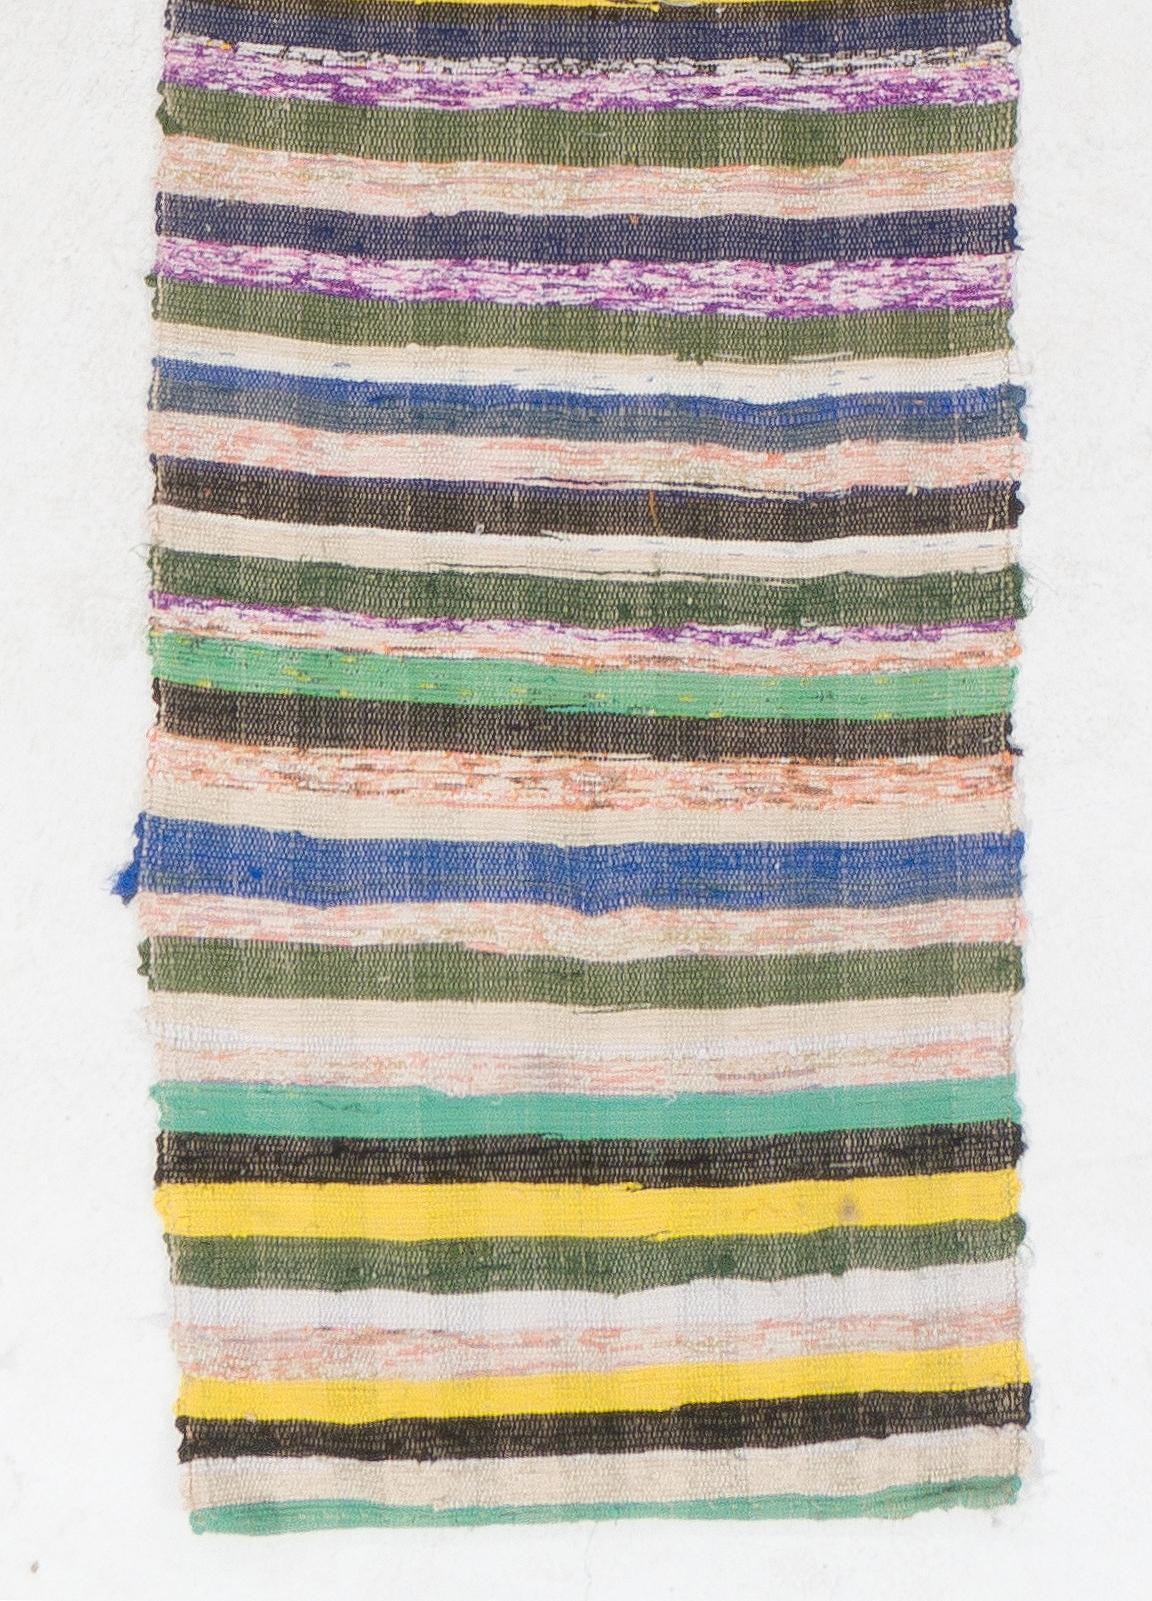 2.2x16 ft Long Narrow Runner Kilim, Handmade Rag Rug in Colorful Stripe Pattern In Good Condition For Sale In Philadelphia, PA